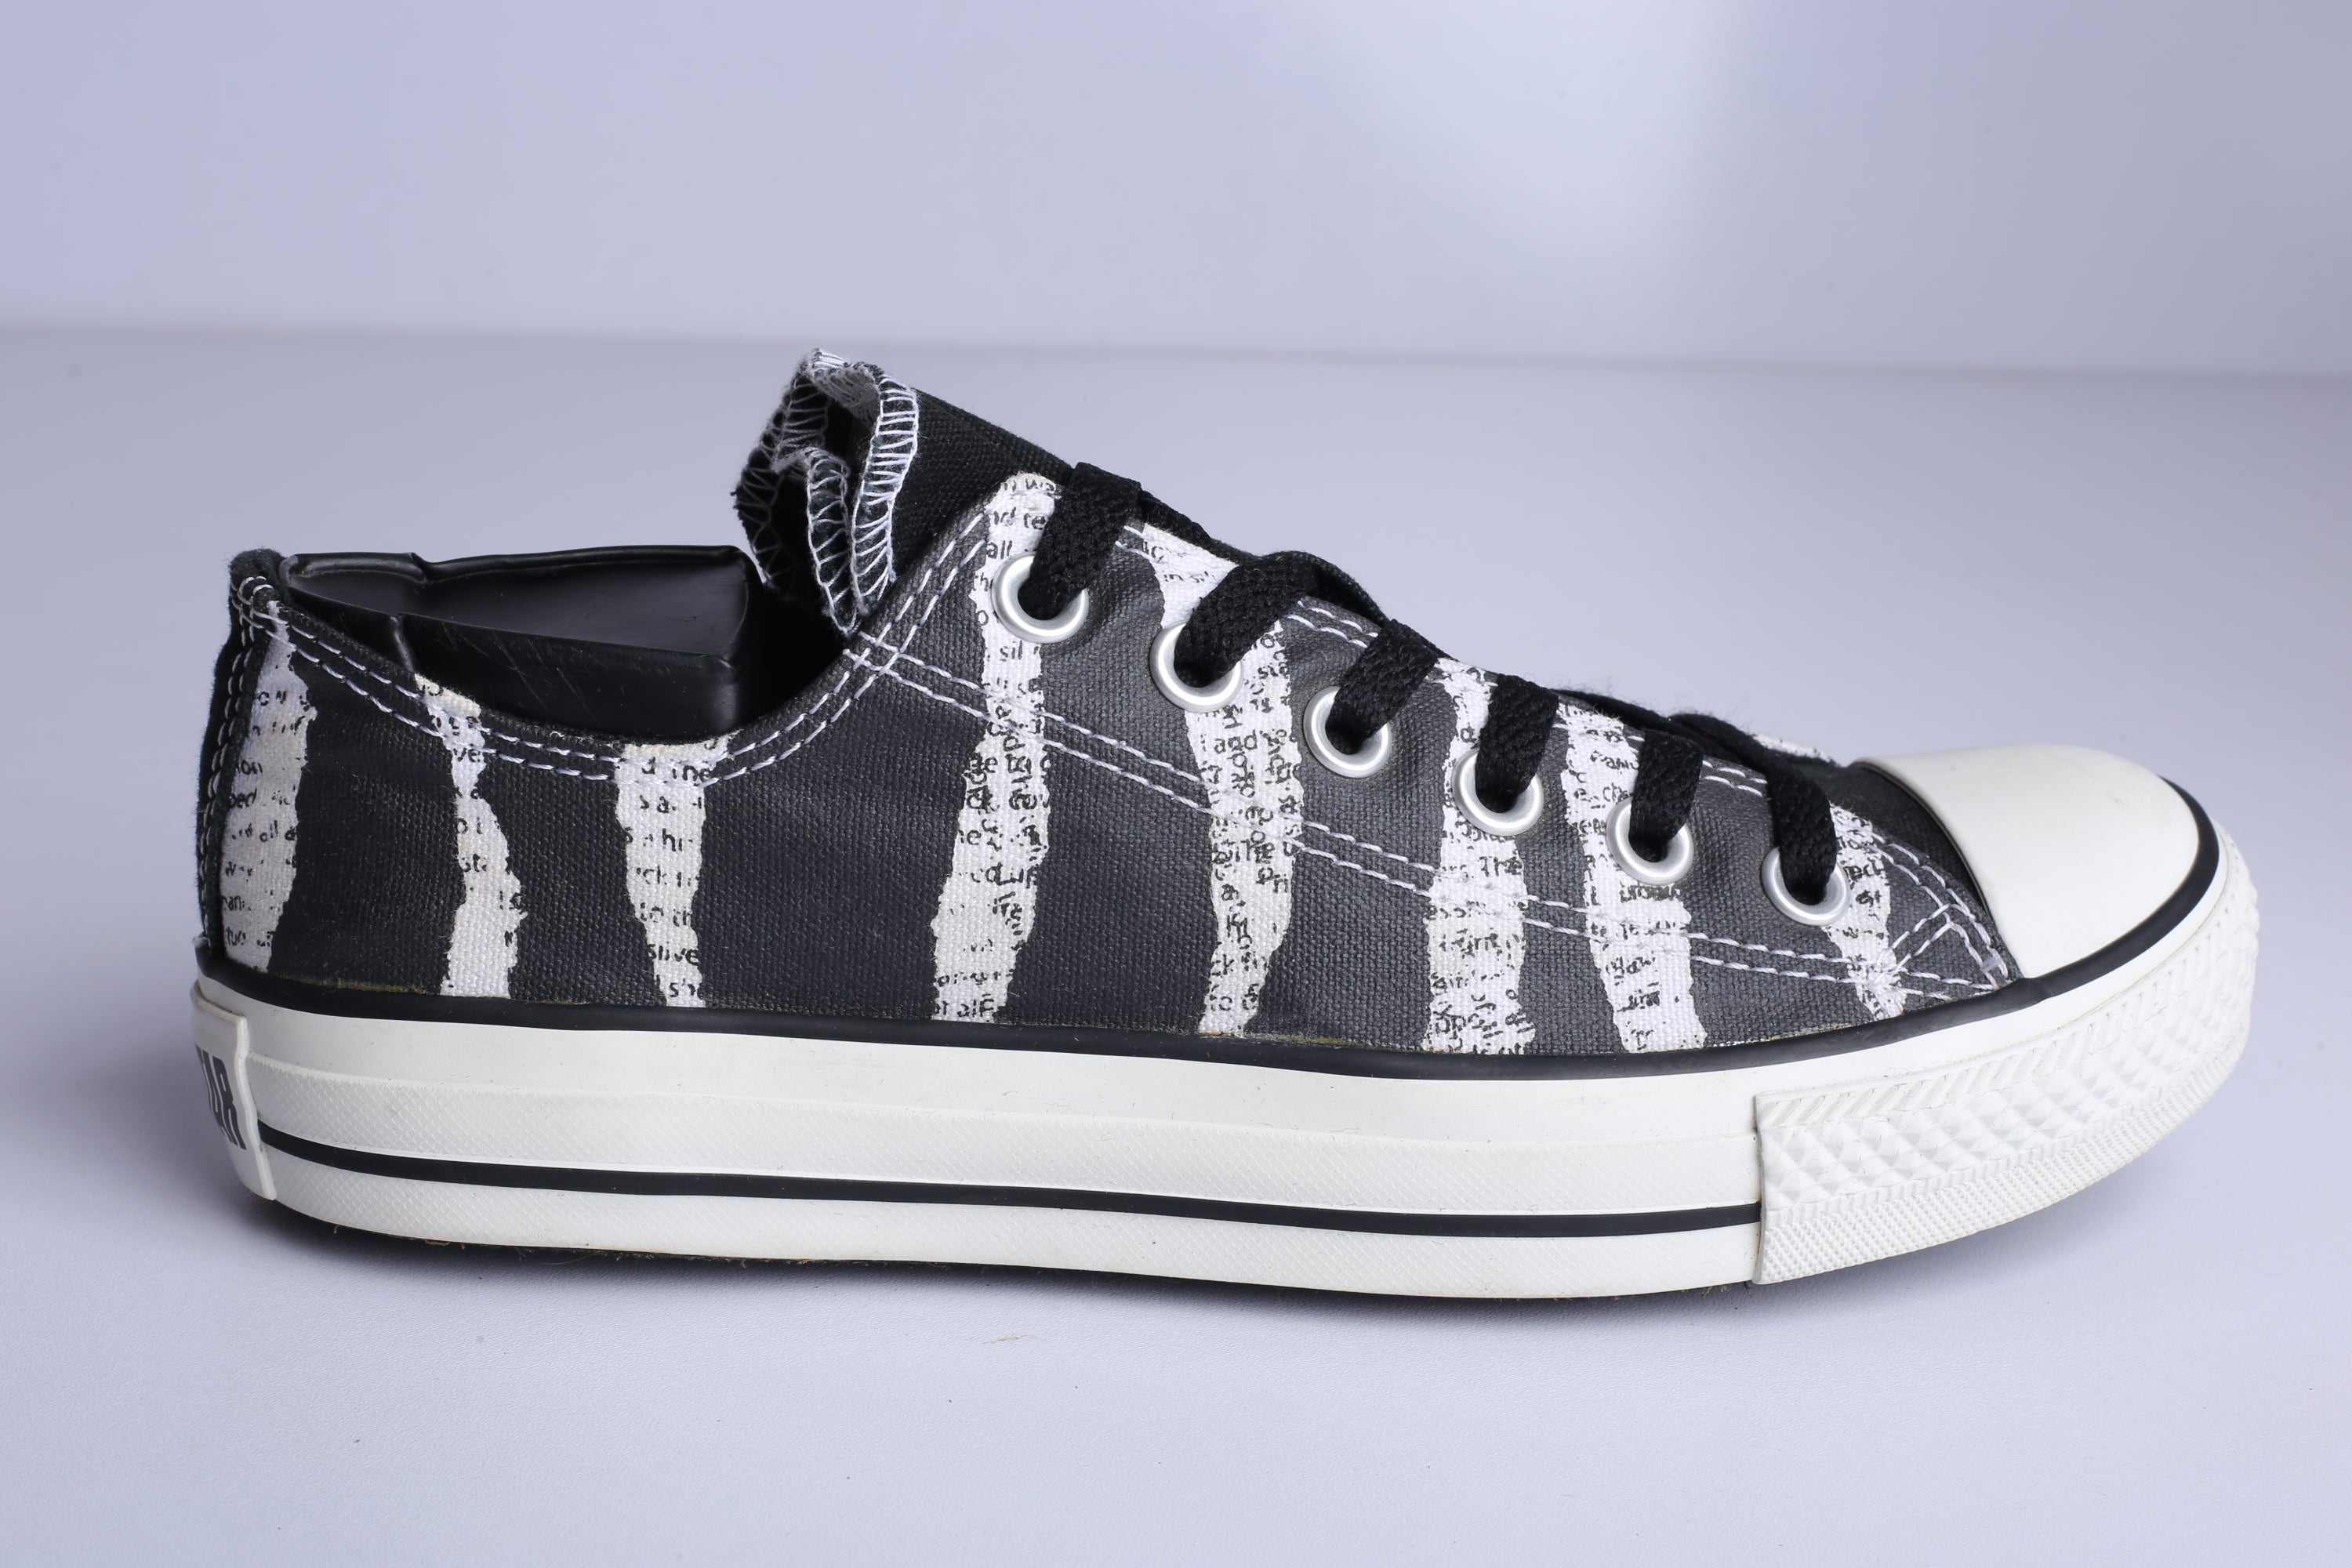 Chuck Taylor All Star Low Black Zebra Print  Sneaker - (Condition Premium*)